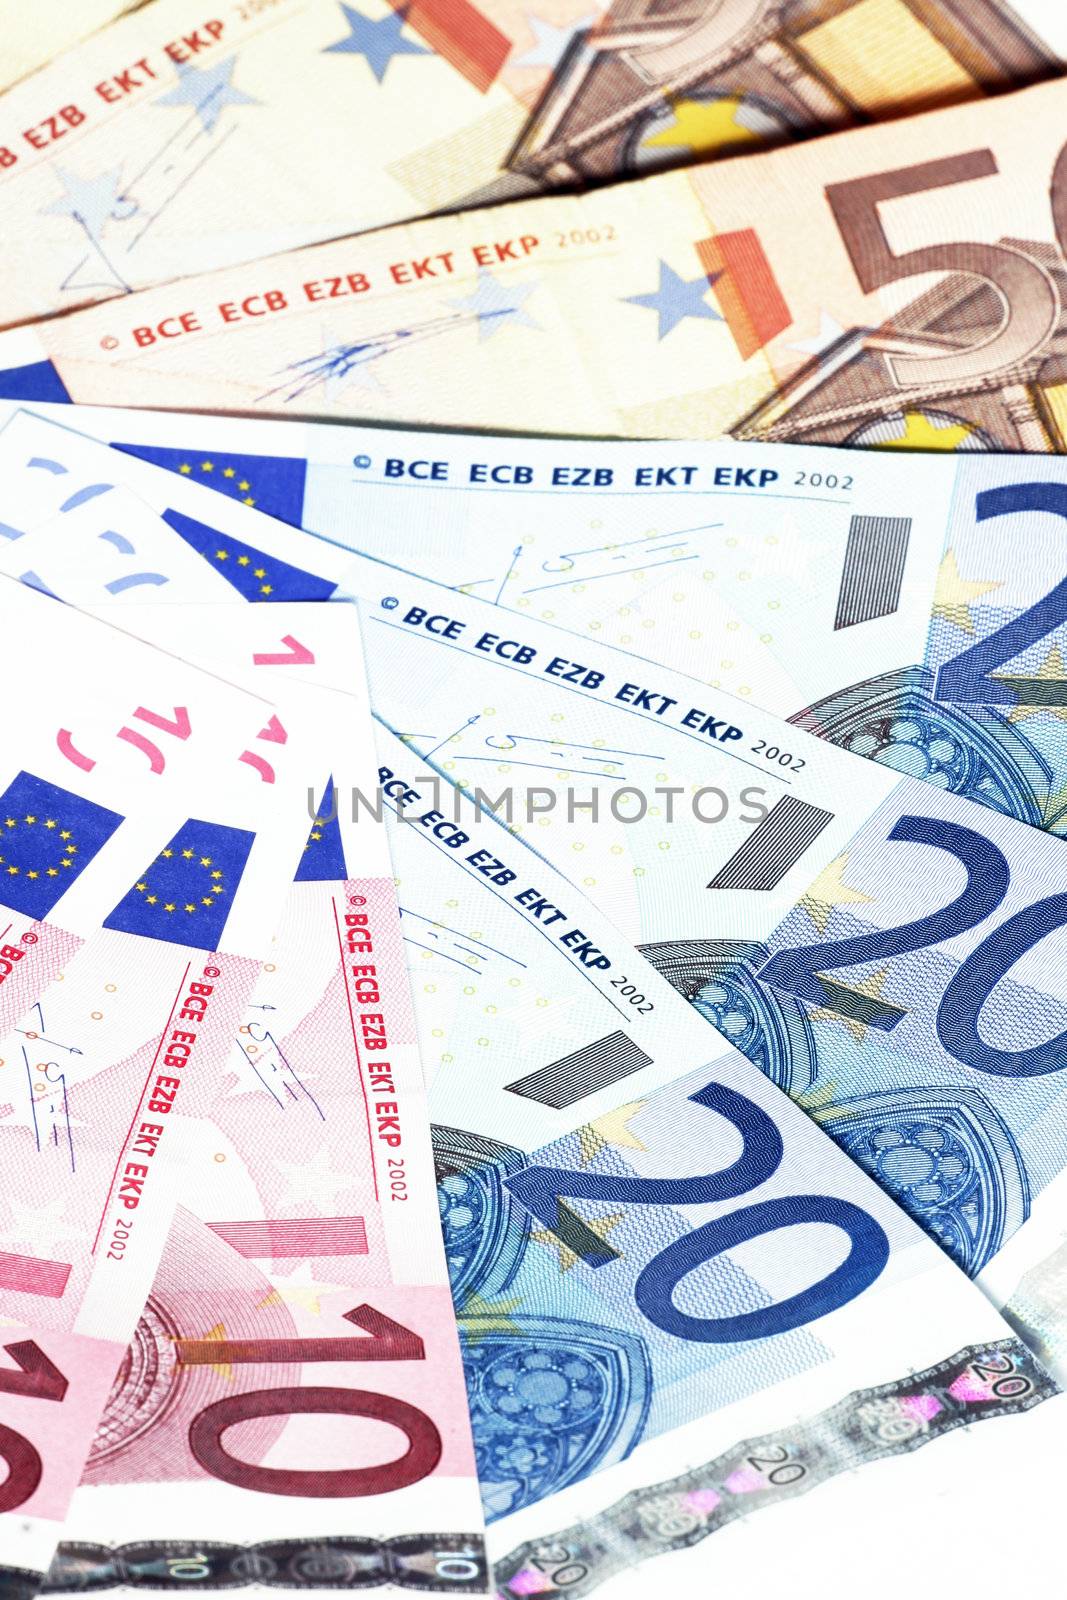 Euro Notes by thorsten